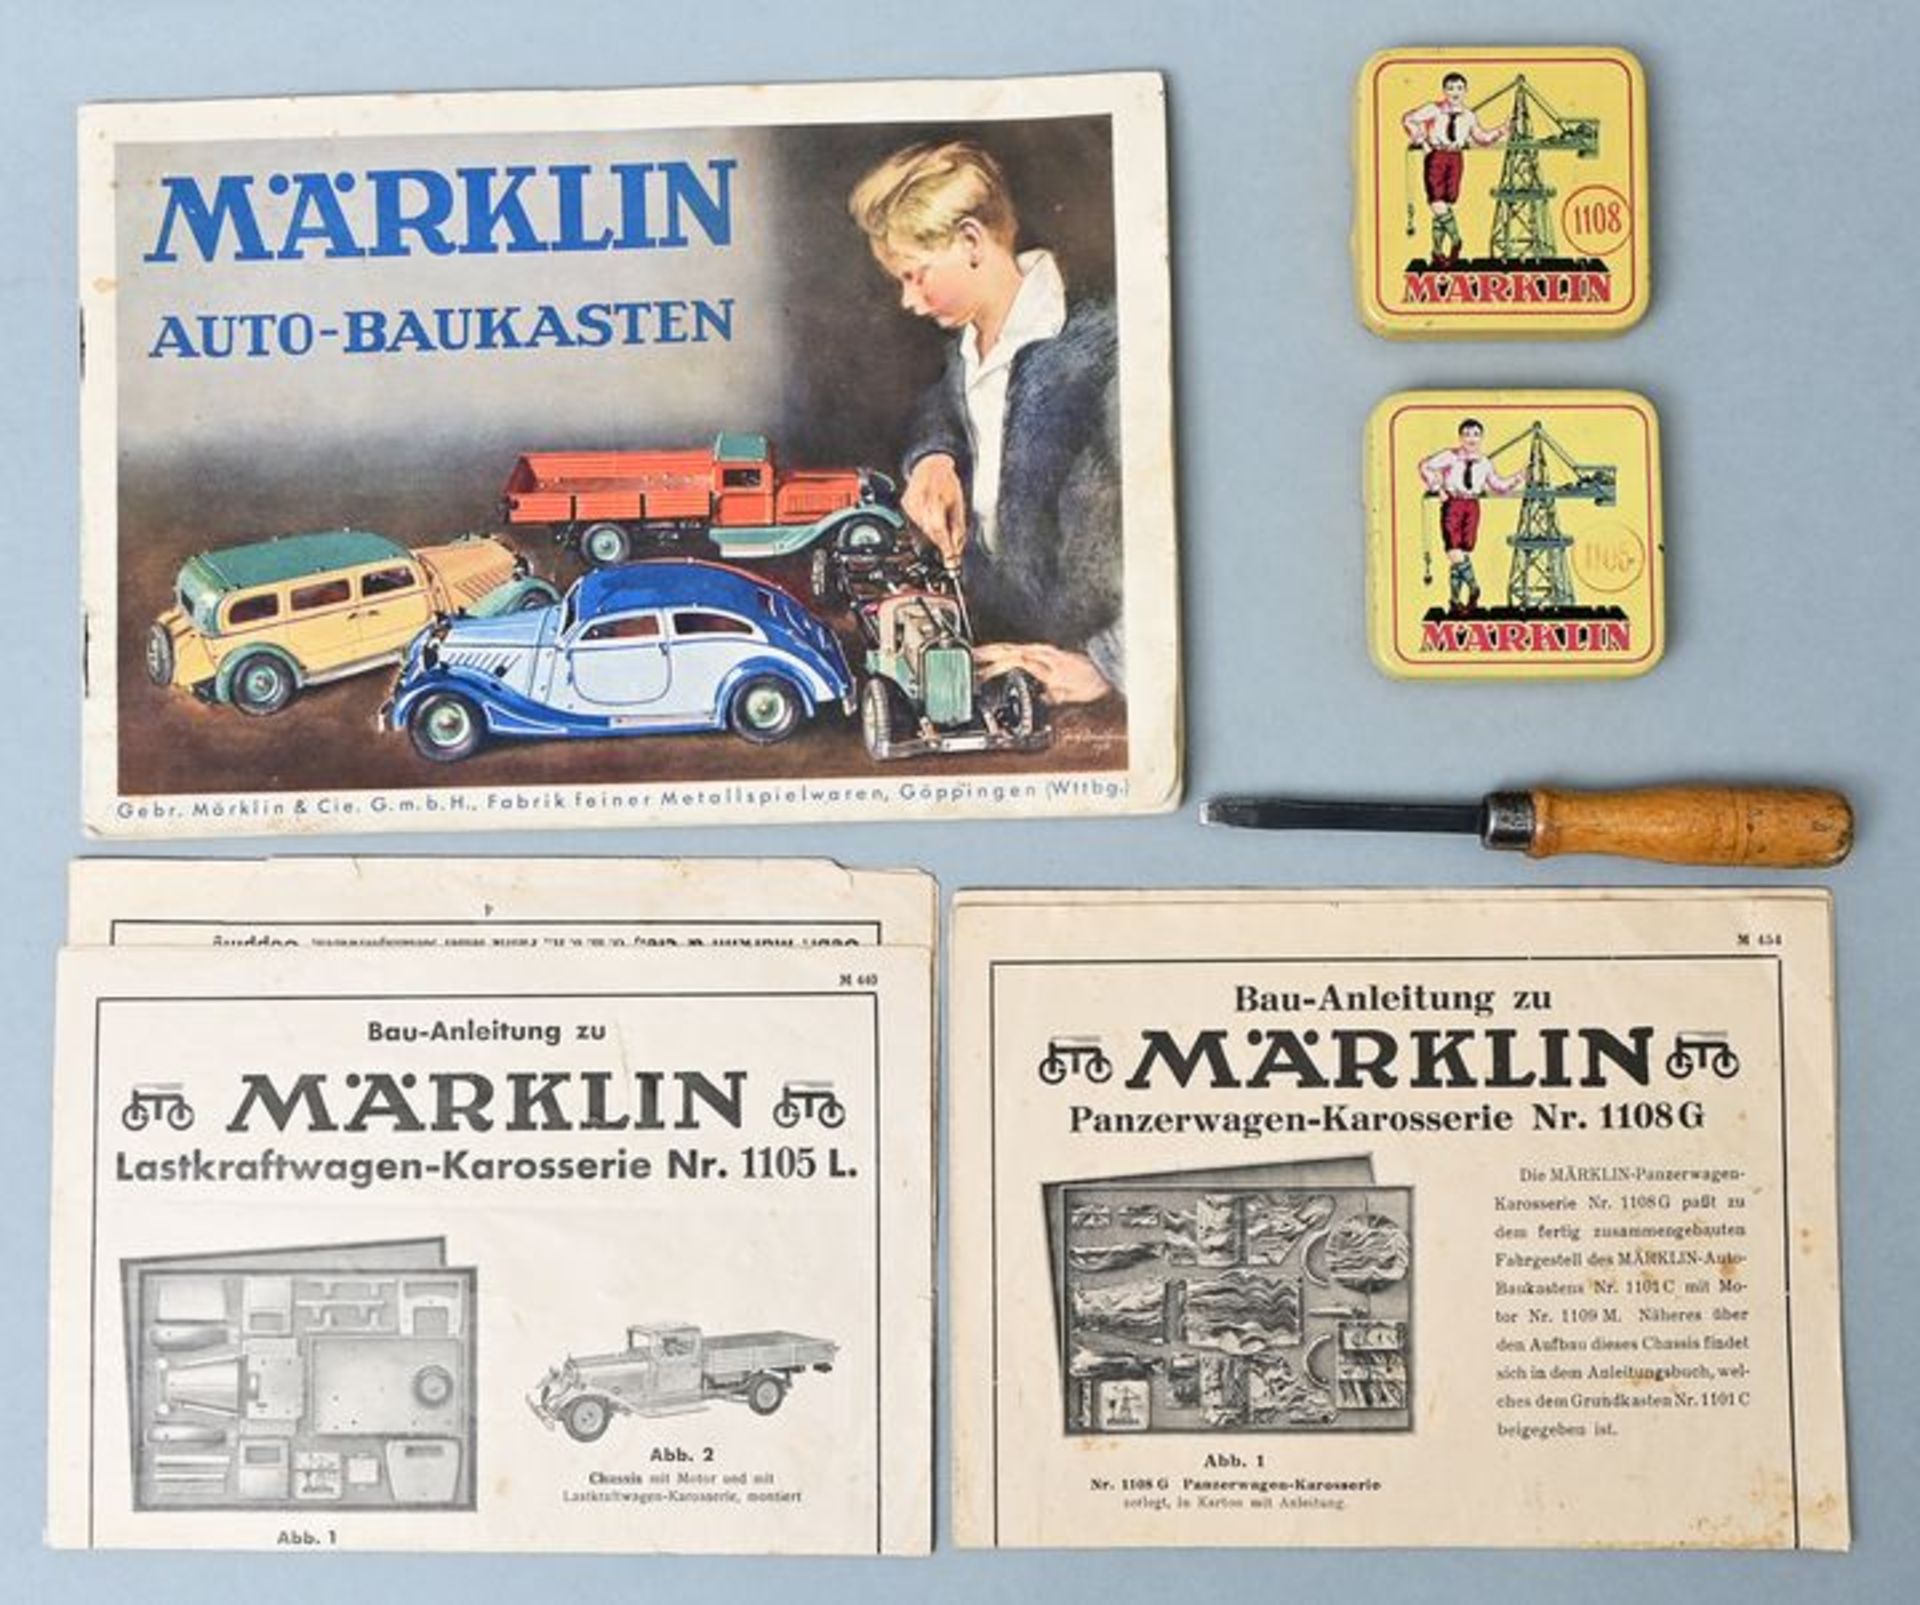 Märklin, Lastkraftwagen-Karosserie mit Panzerwagenaufsatz / Tin toys - Image 2 of 3